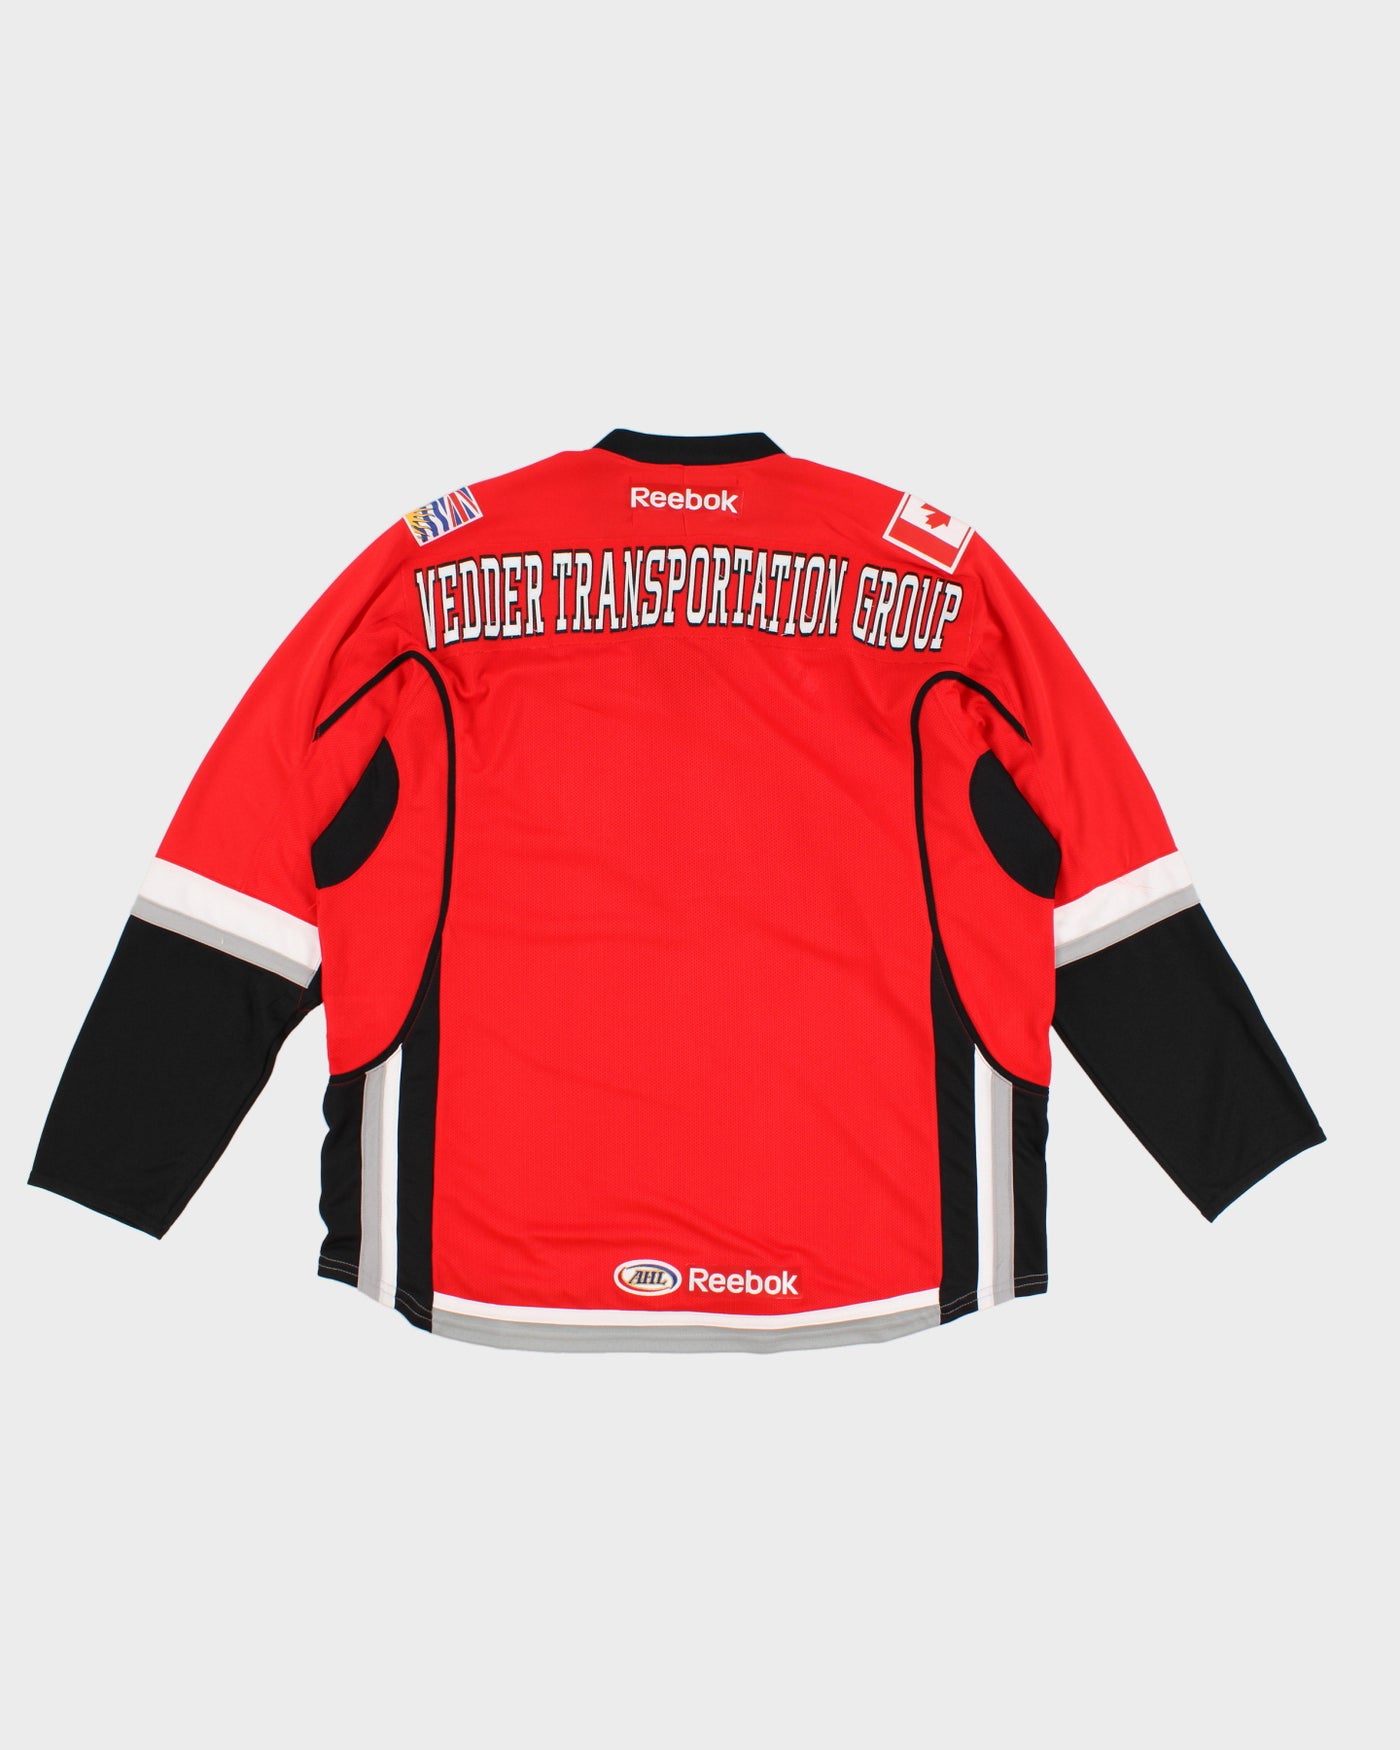 AHL x Abbotsford Heat Reebok Hockey Jersey - XL